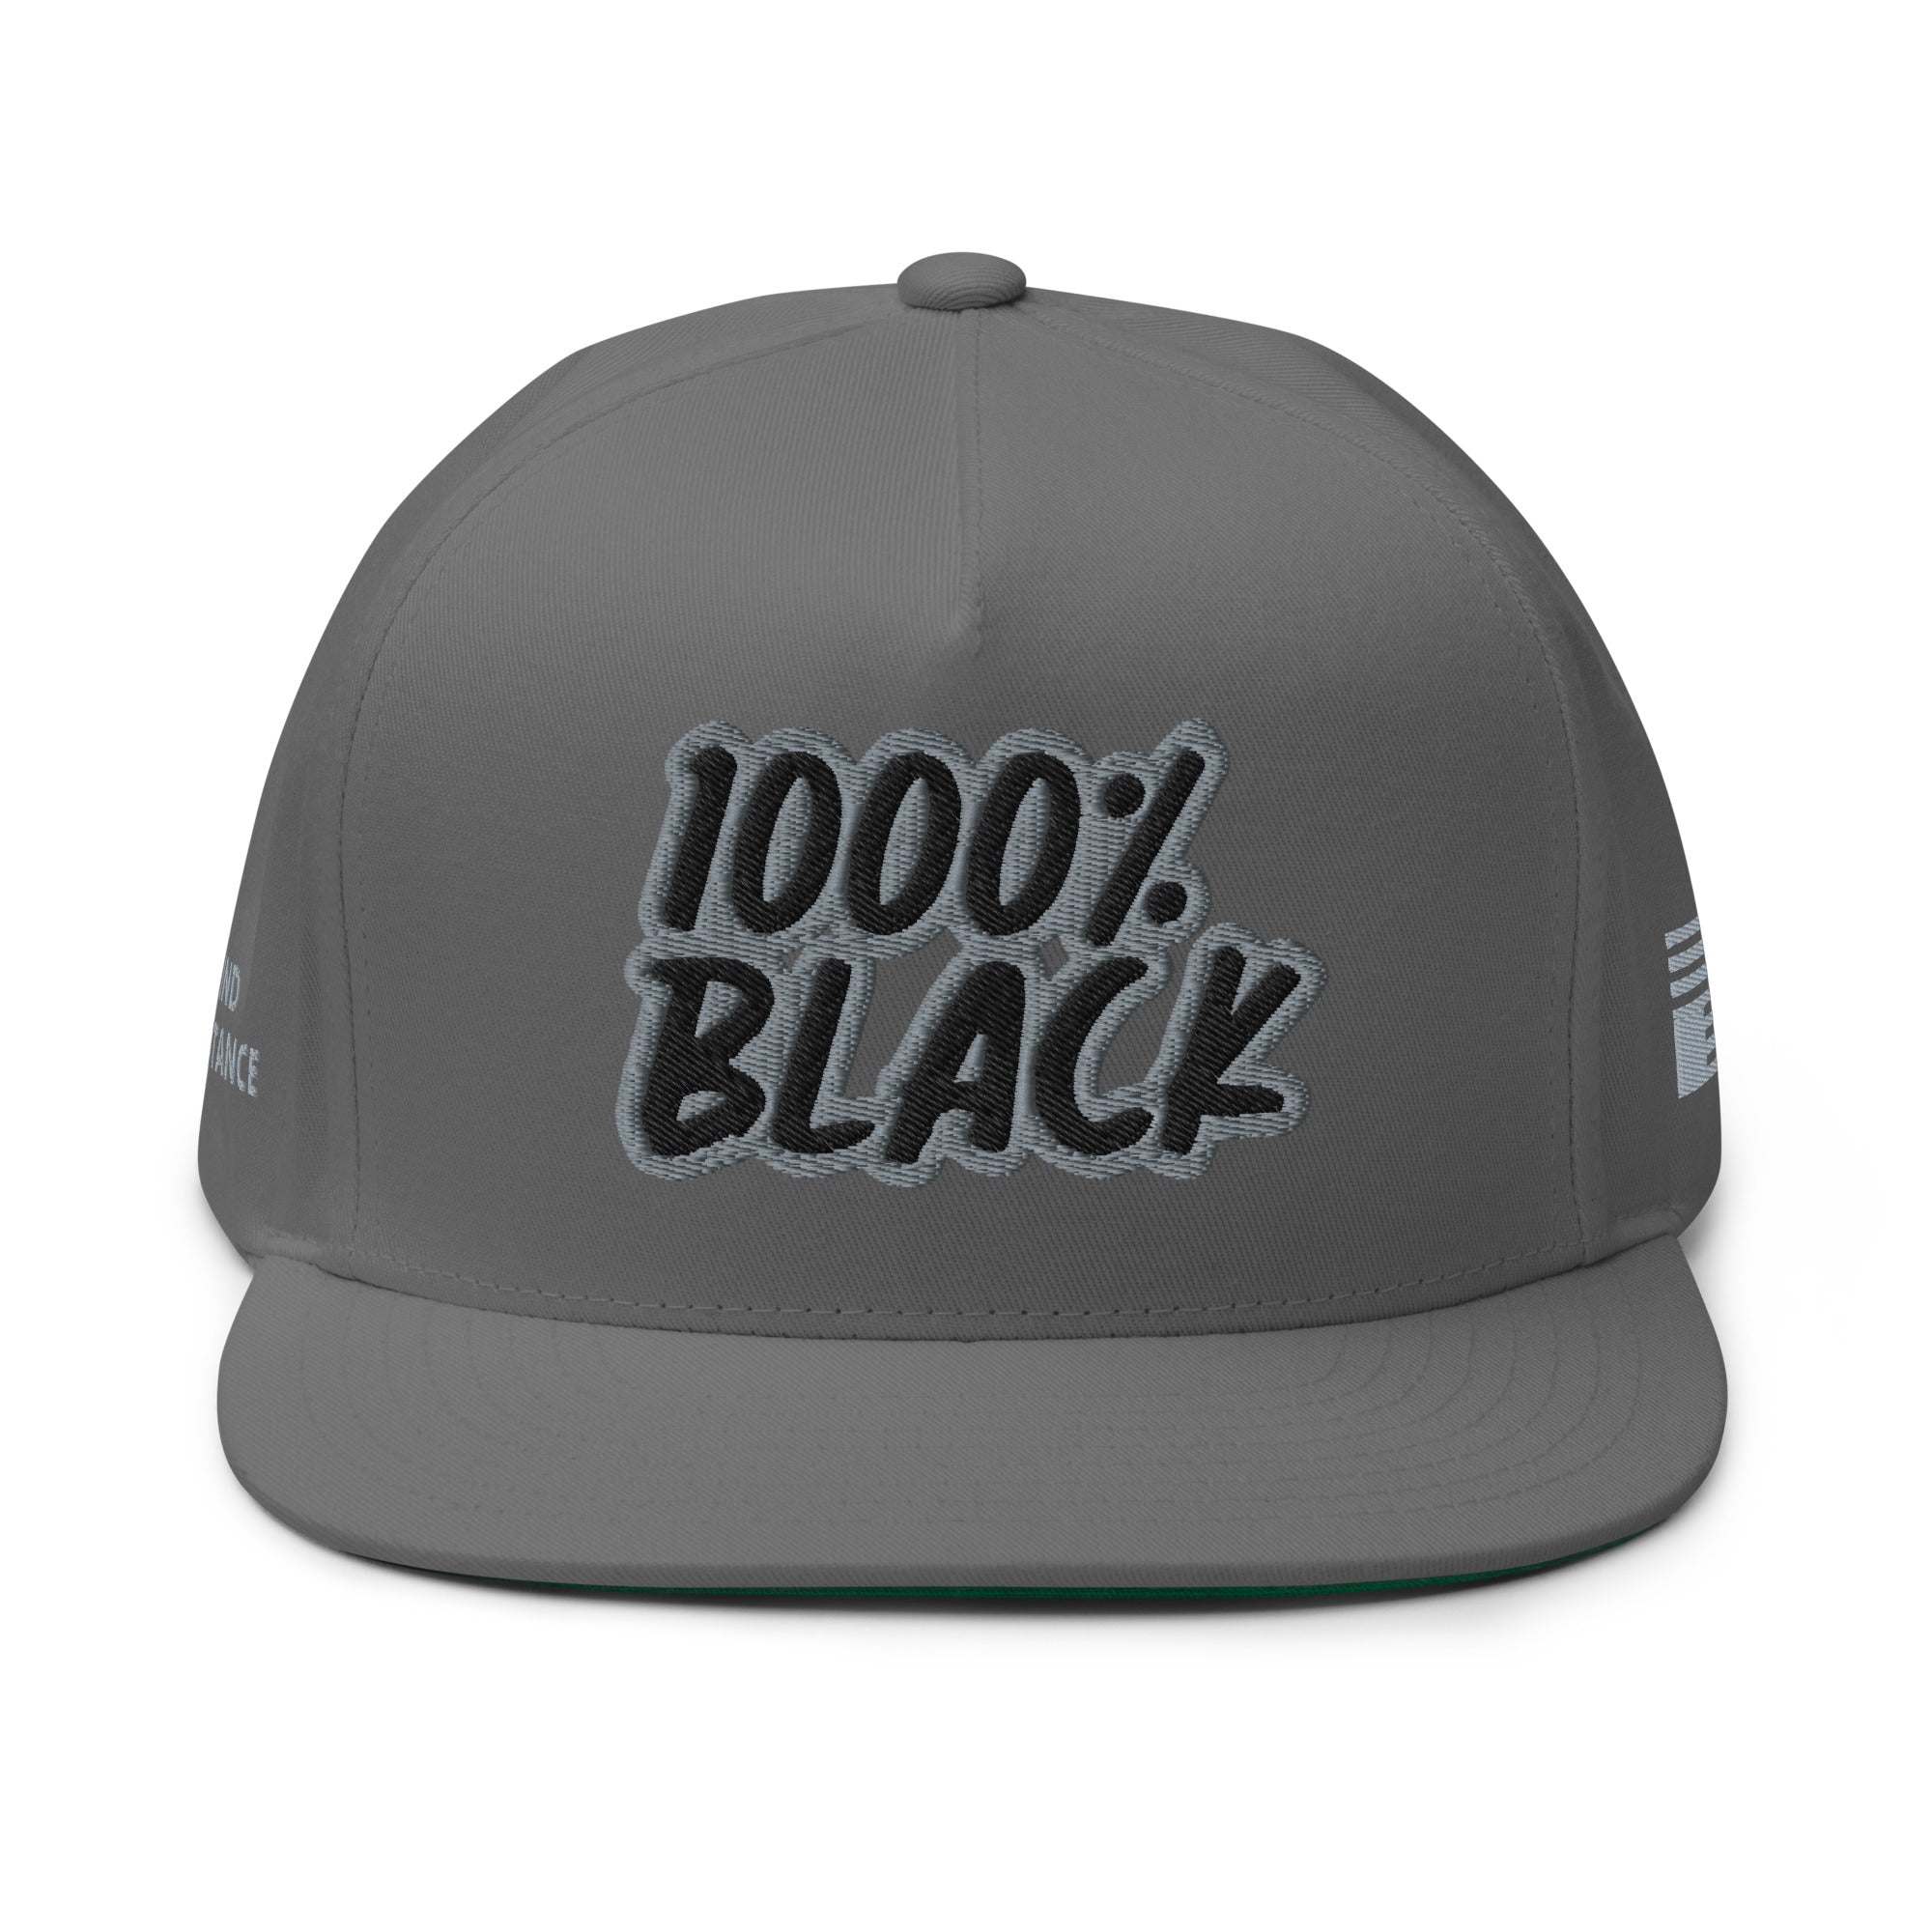 1000% Black (Stop the Violence Flag) Flat Bill Cap